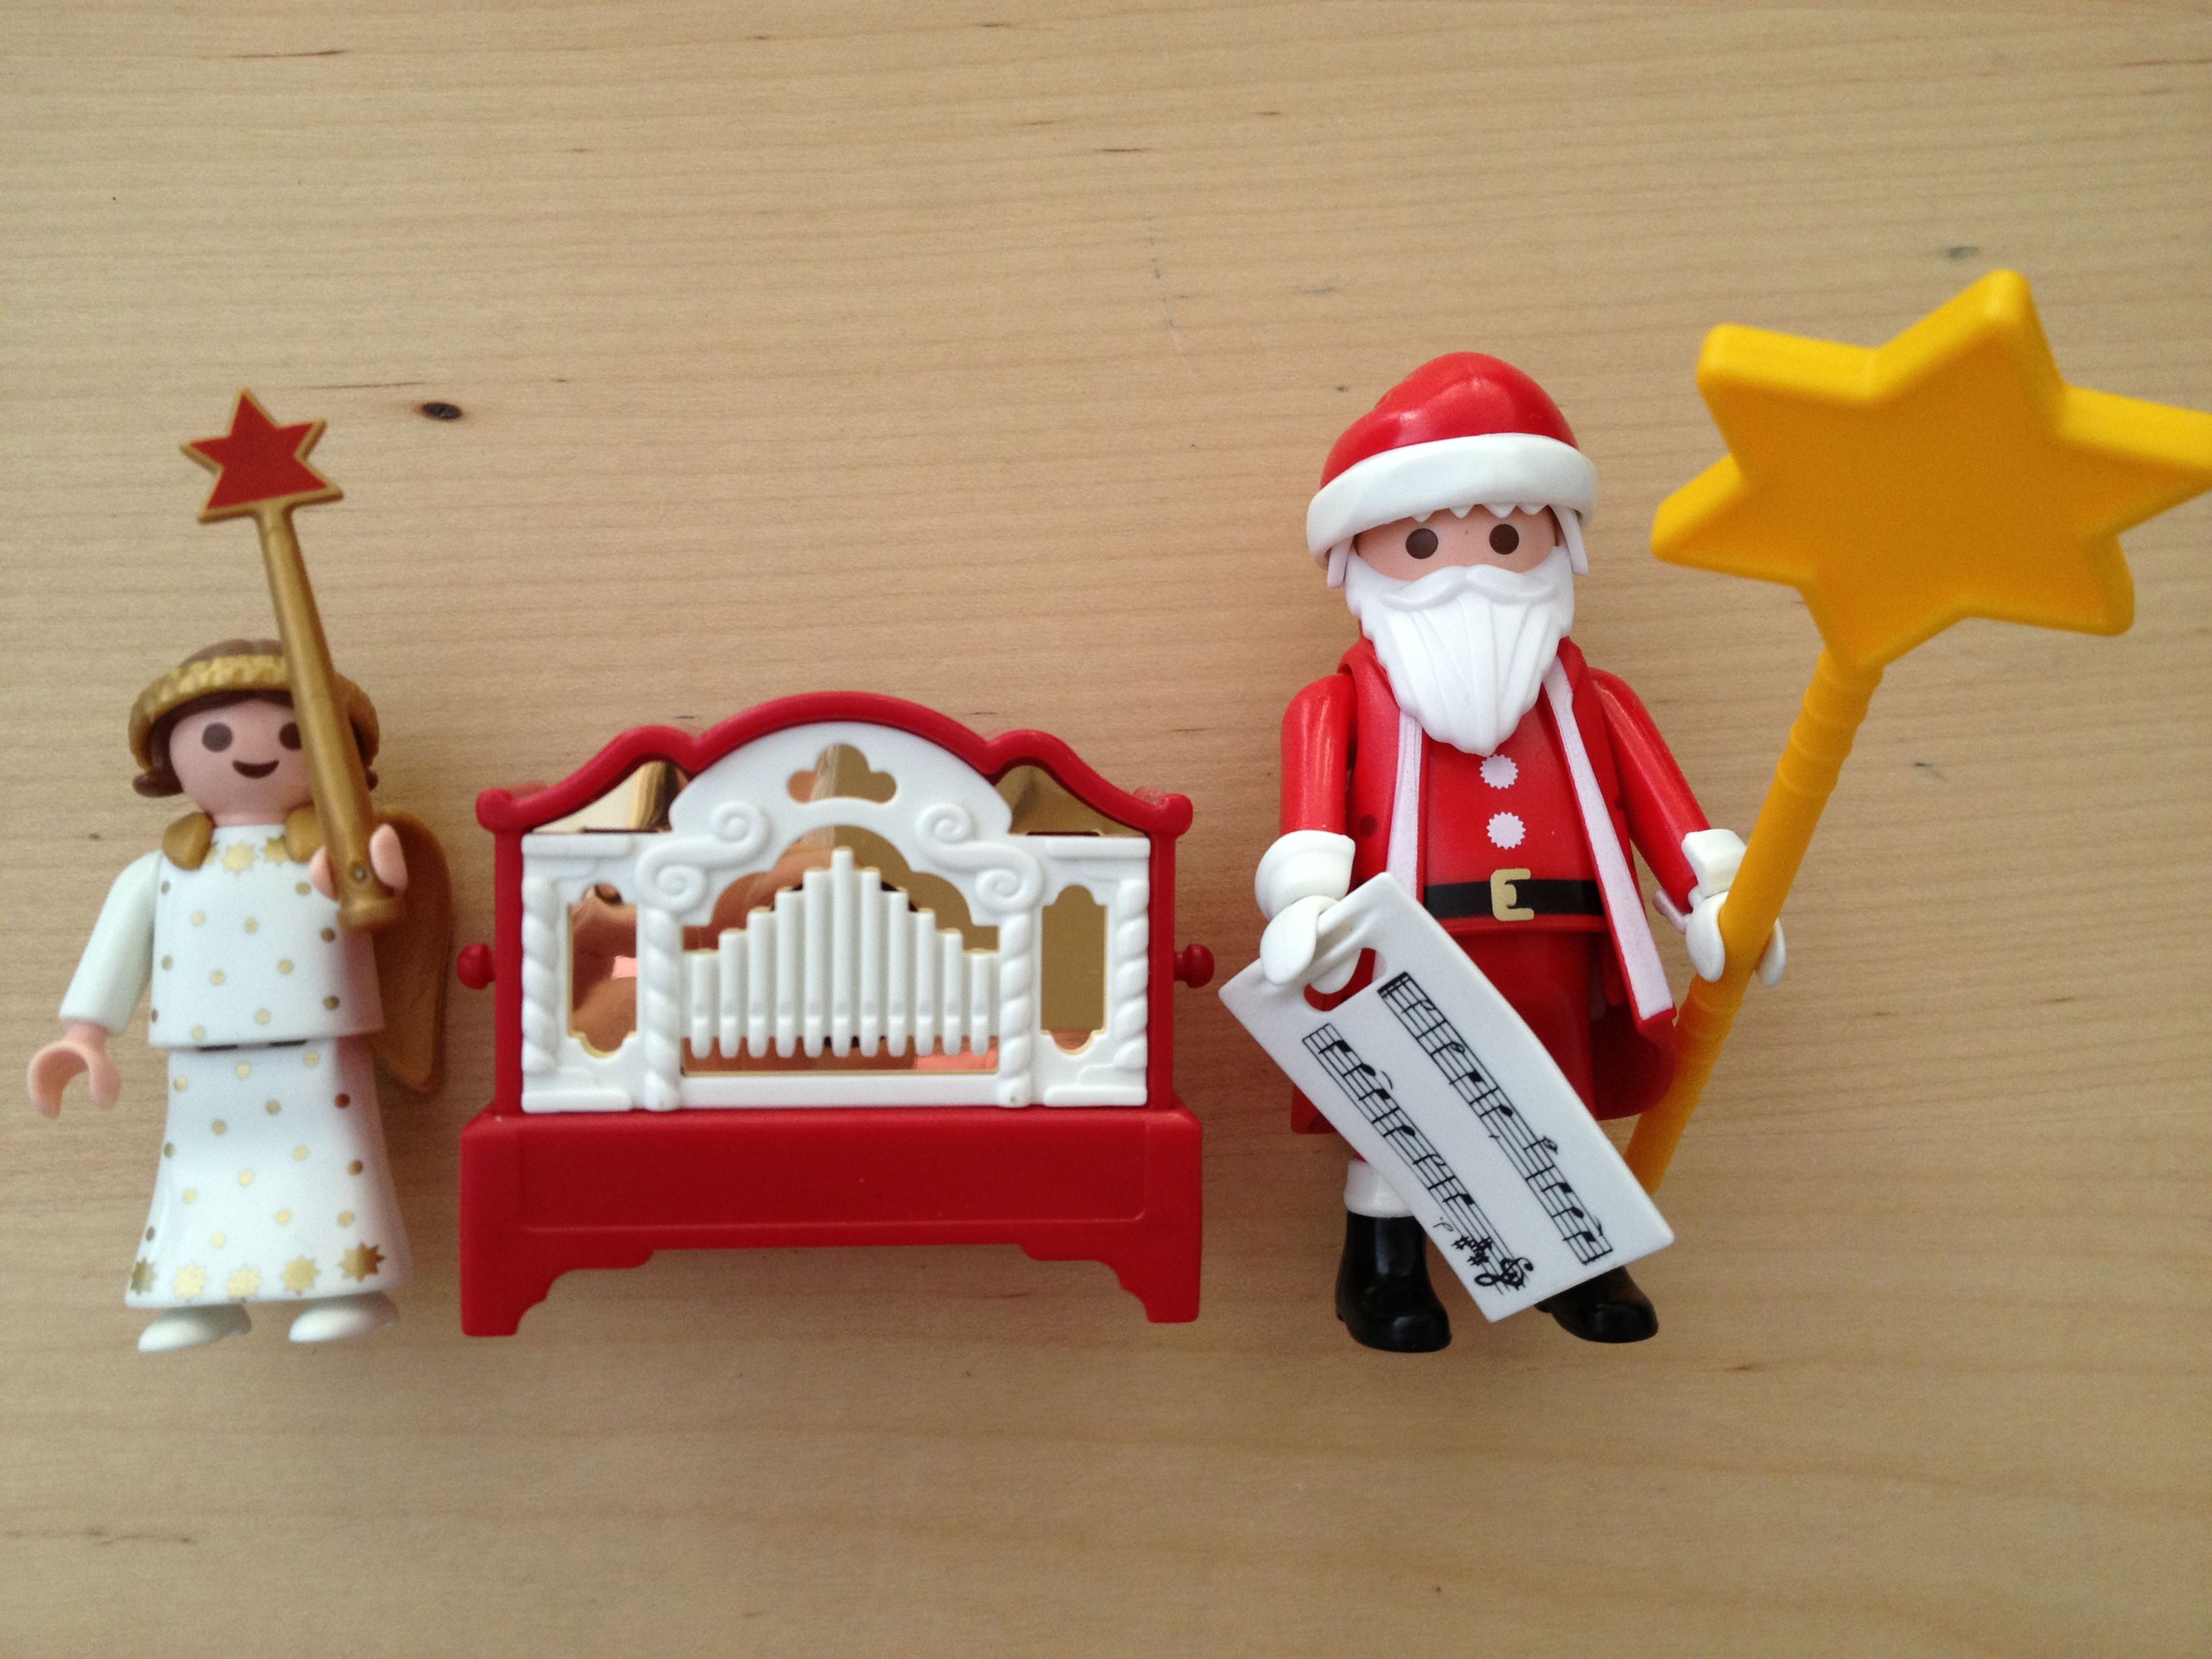 Playmobil Christmas figures | Playmobil | Pinterest | Playmobil and ...